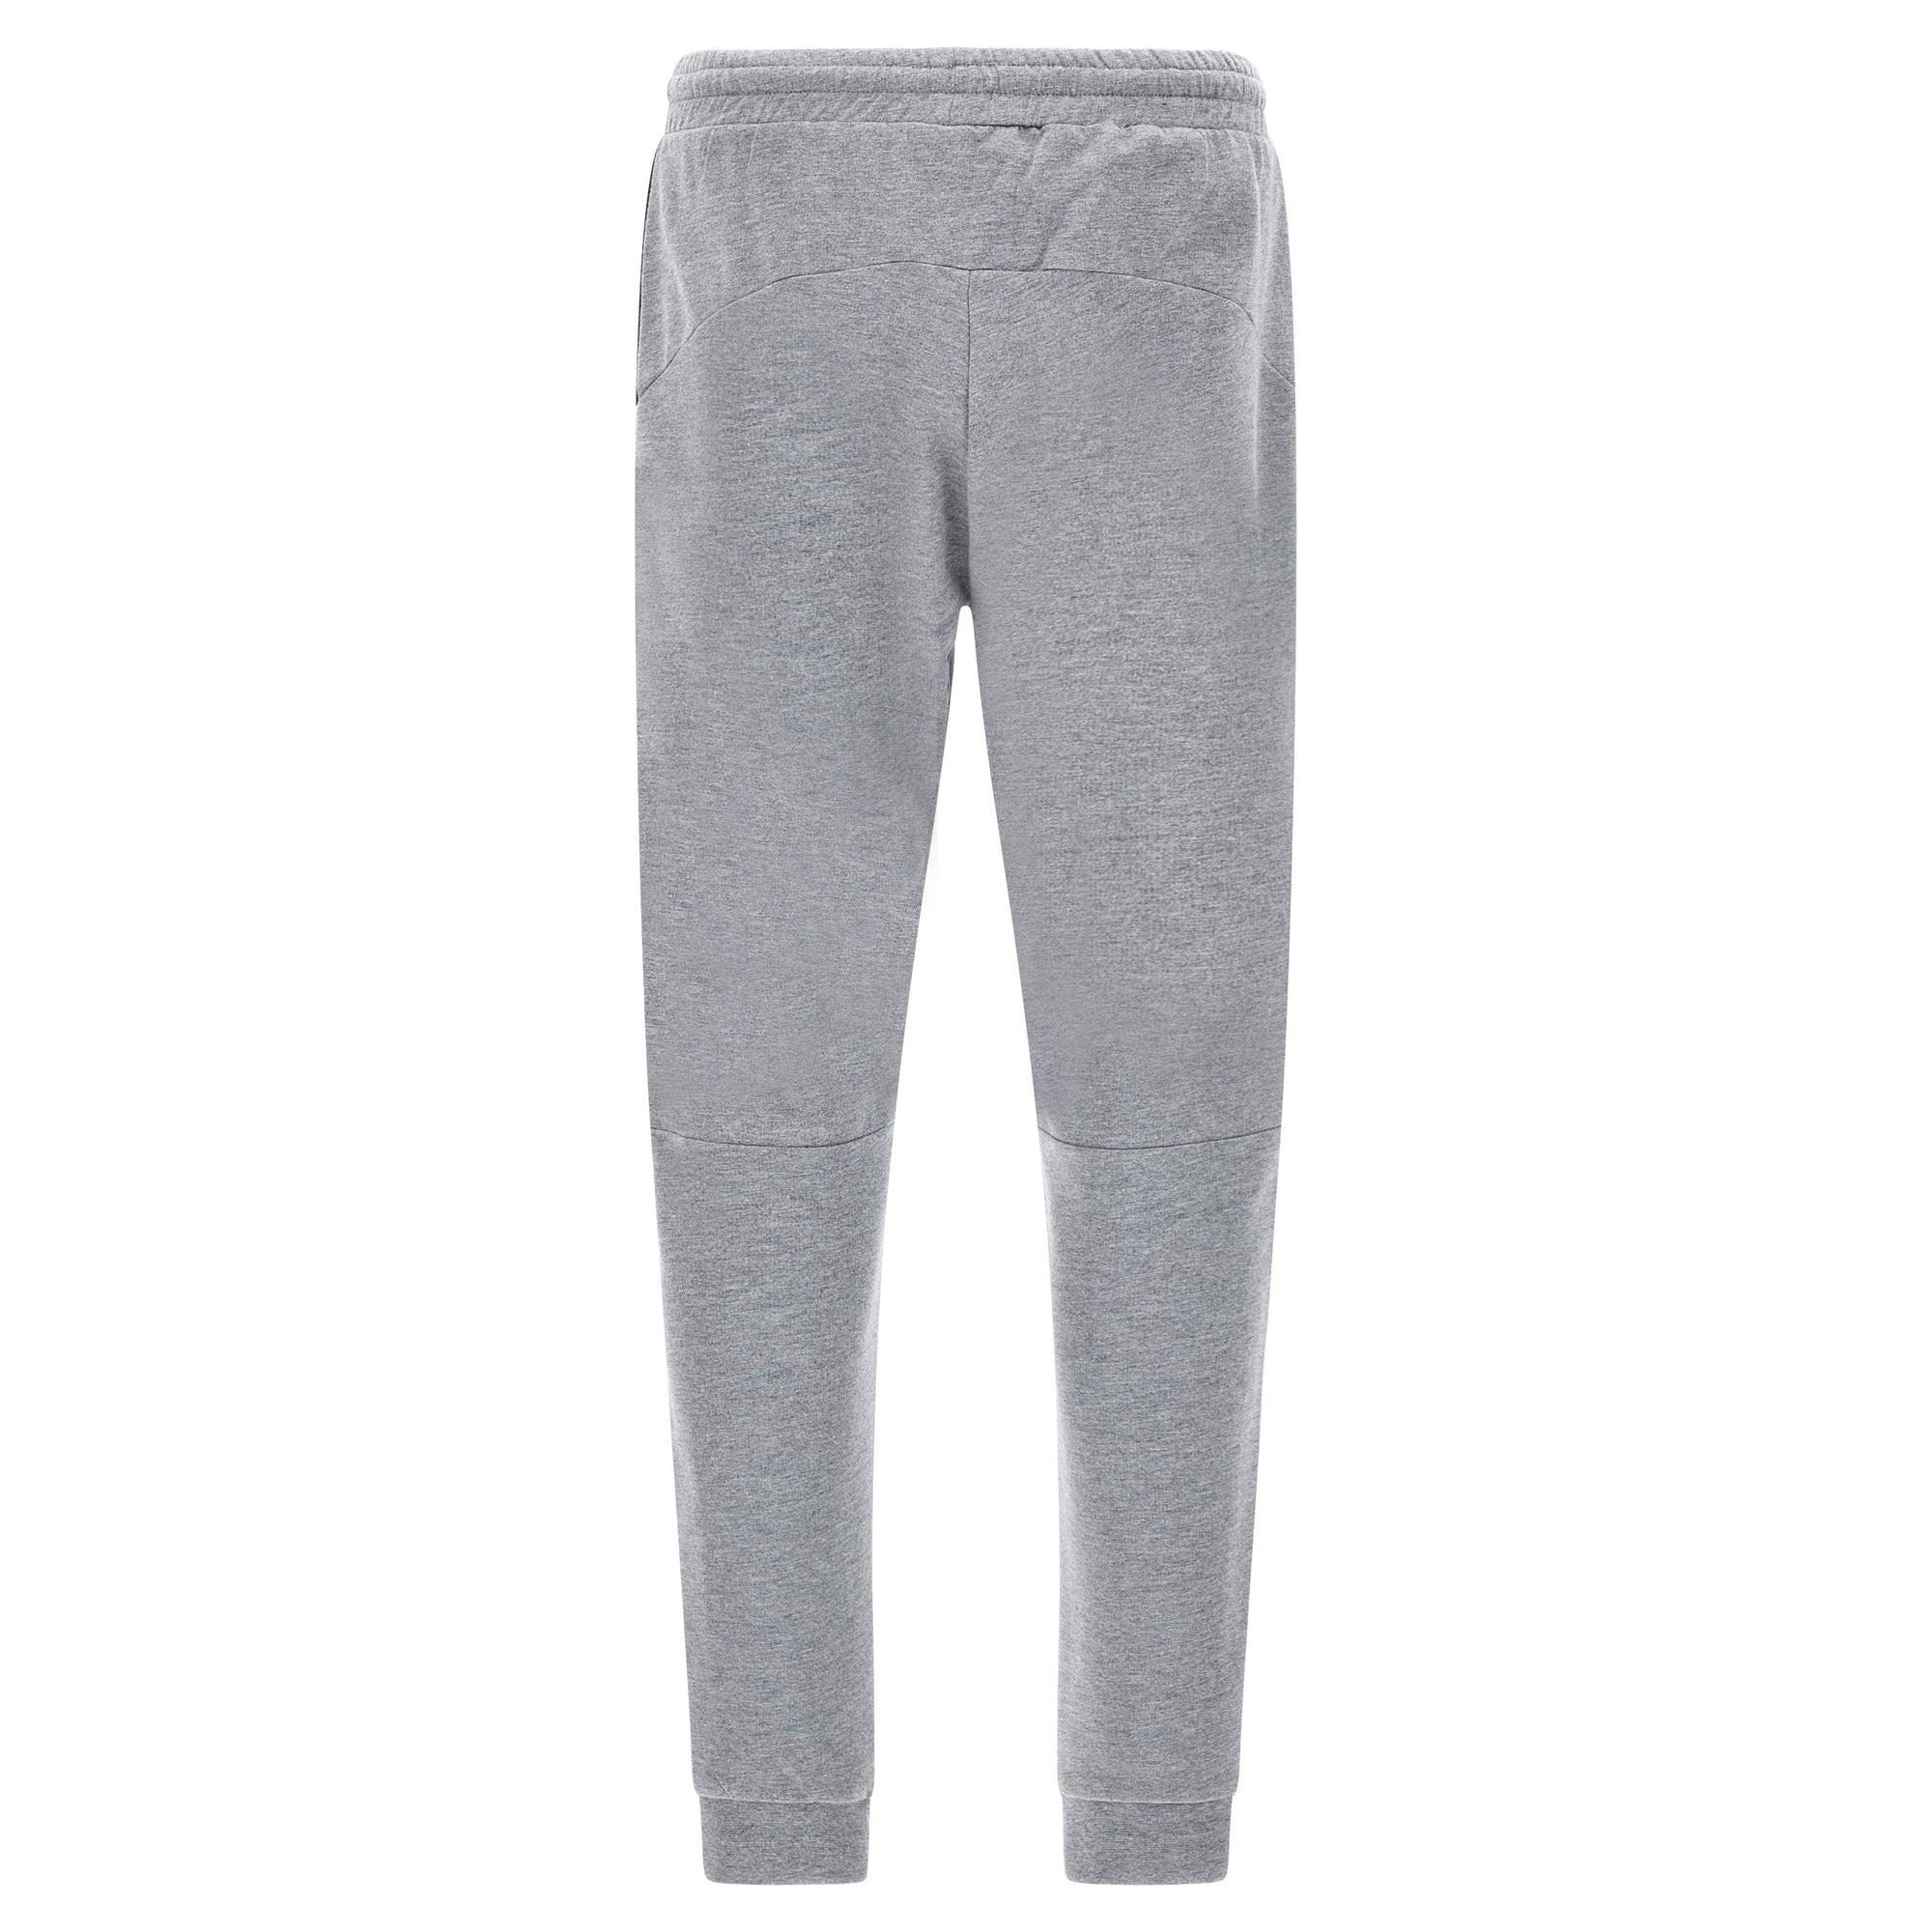 Men's Tracksuit Pants - Melange Grey